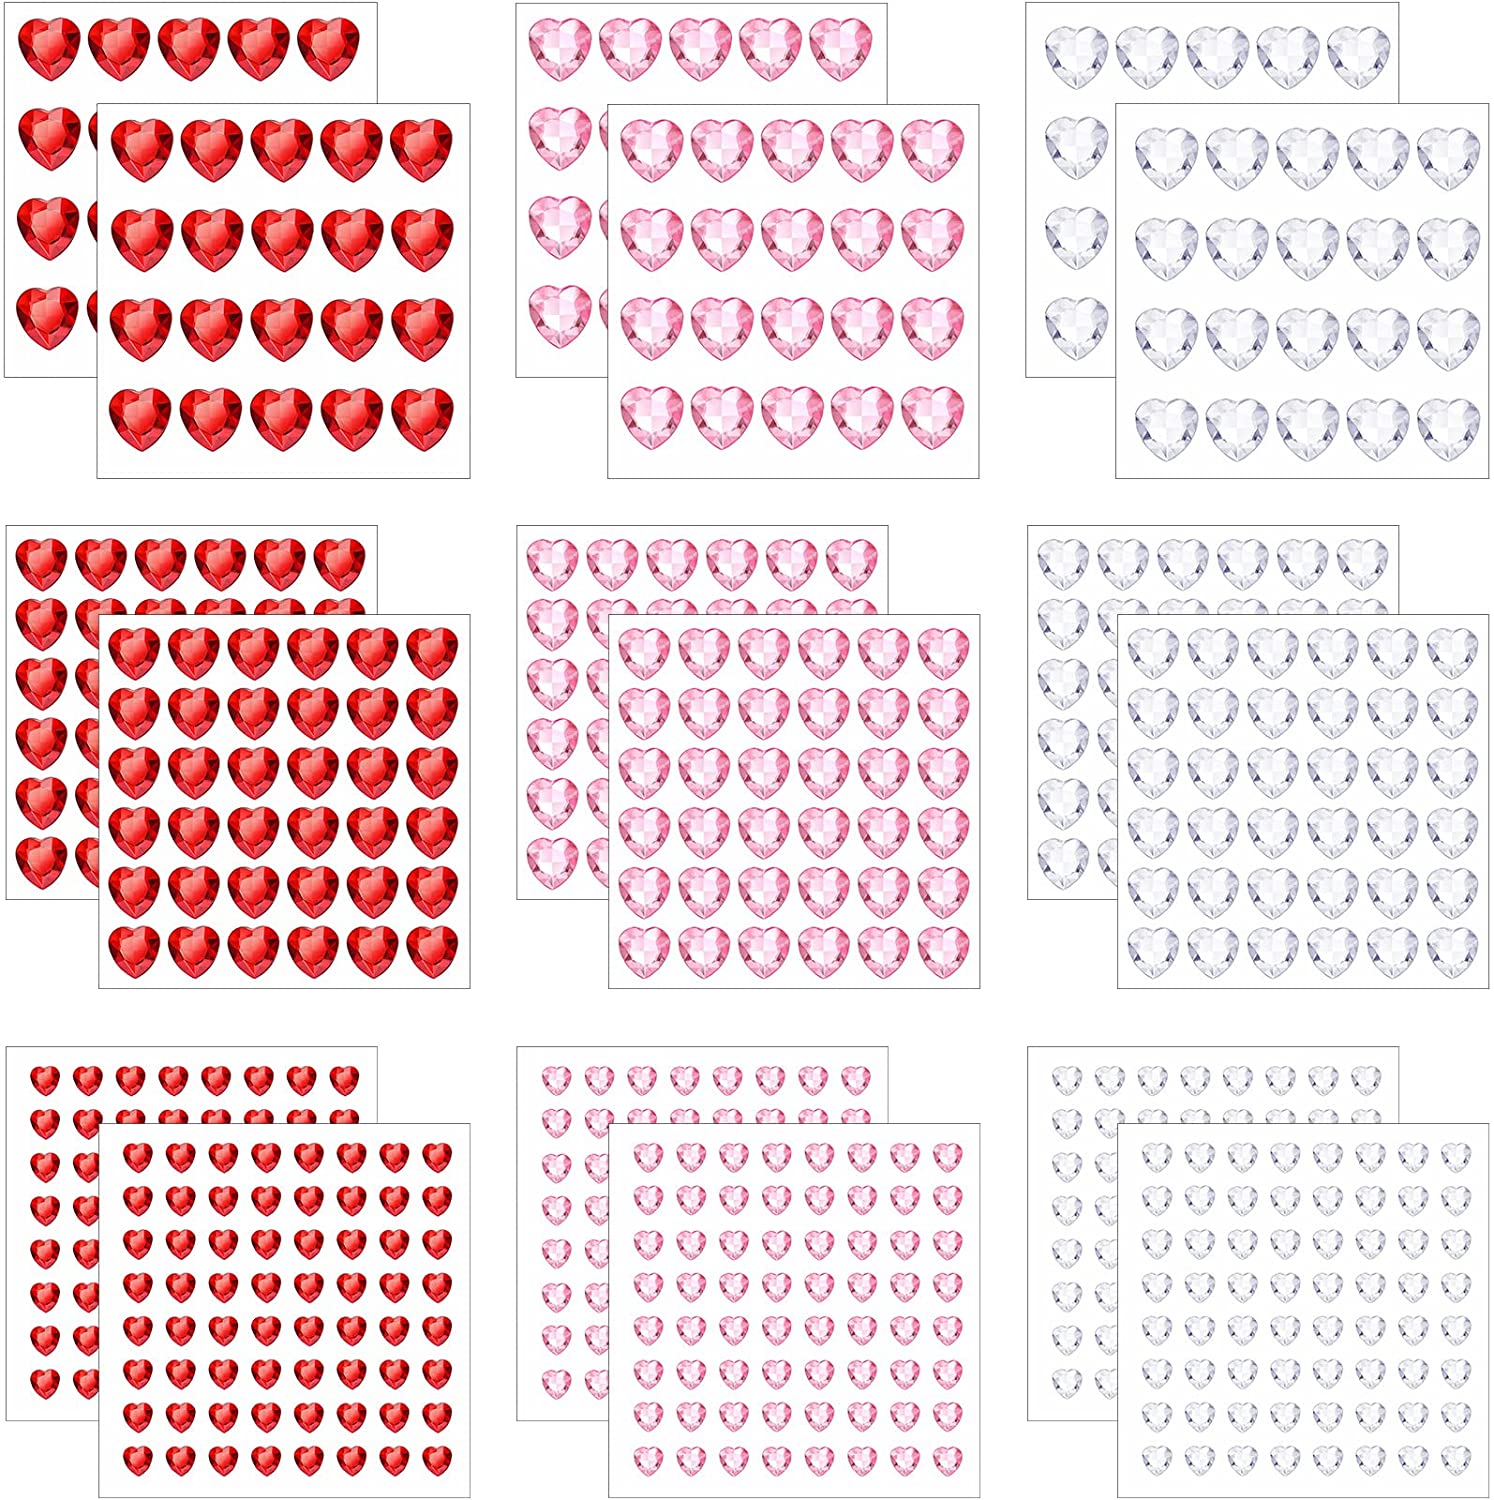 720 Pieces Valentine's Day Heart Rhinestone Sticker Self Adhesive Crystal Gems Sticker Flat Back Heart Stickers Acrylic Face Stickers Jewels Gems for Crafts for Wedding DIY Making (White, Red, Pink)